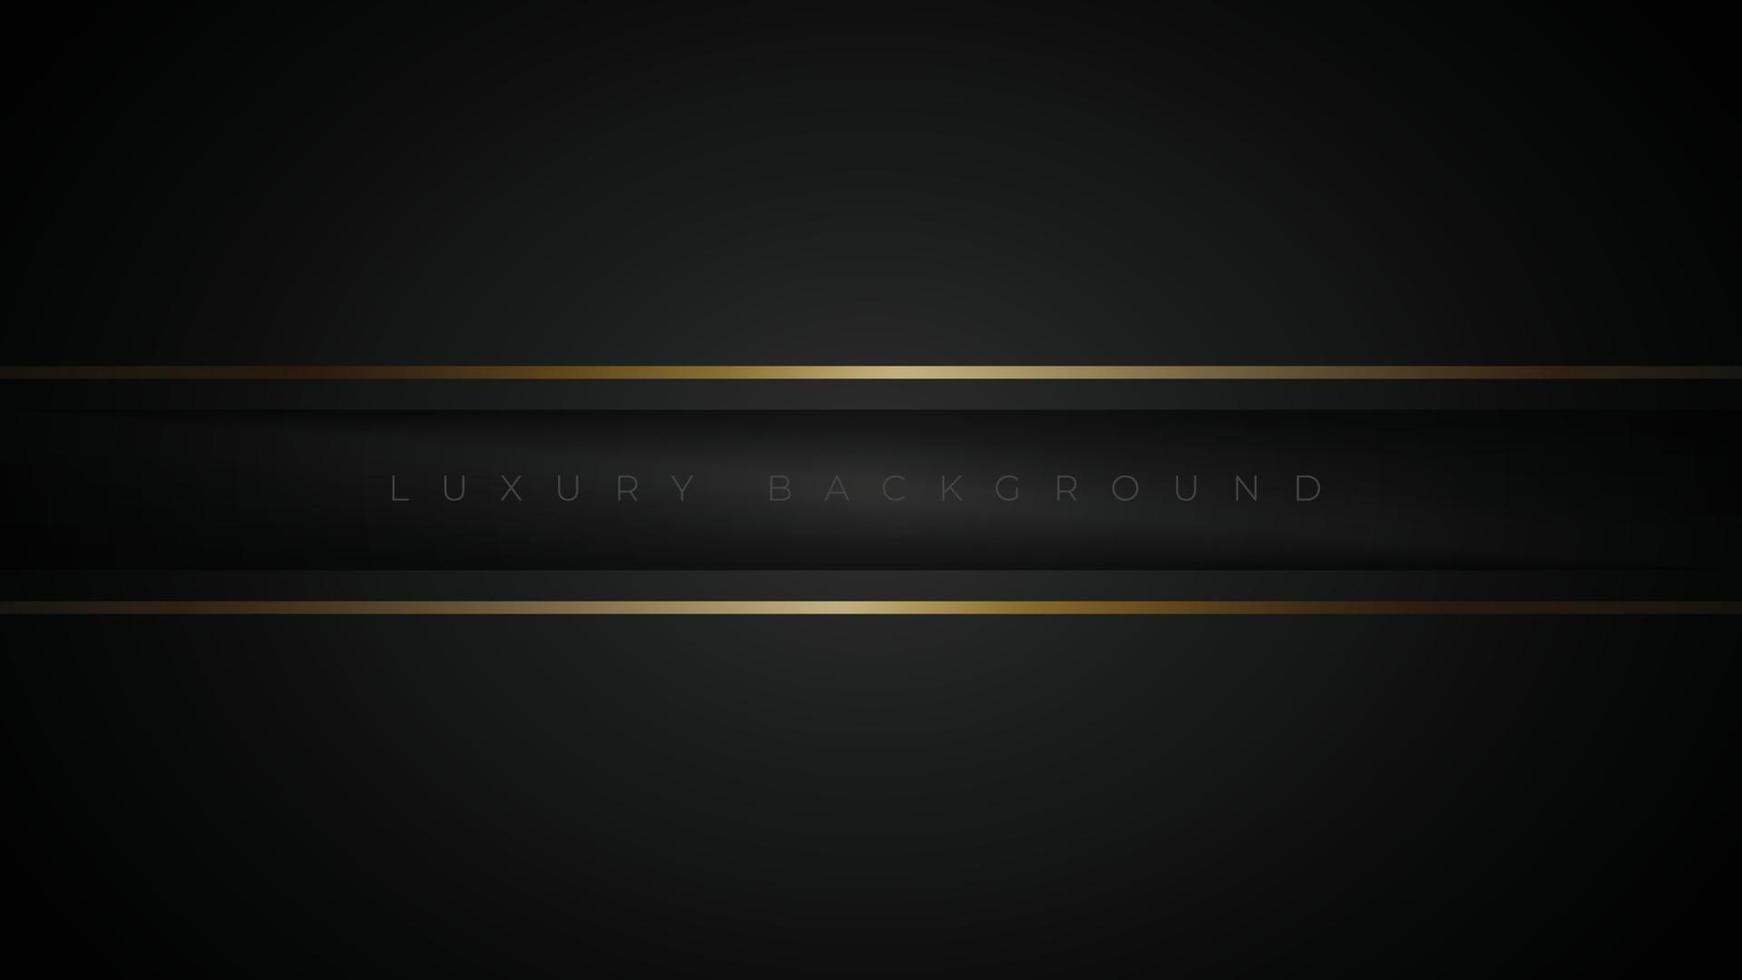 Abstract luxury black background with gold lines. Minimal elegant dark background. Premium vector illustration